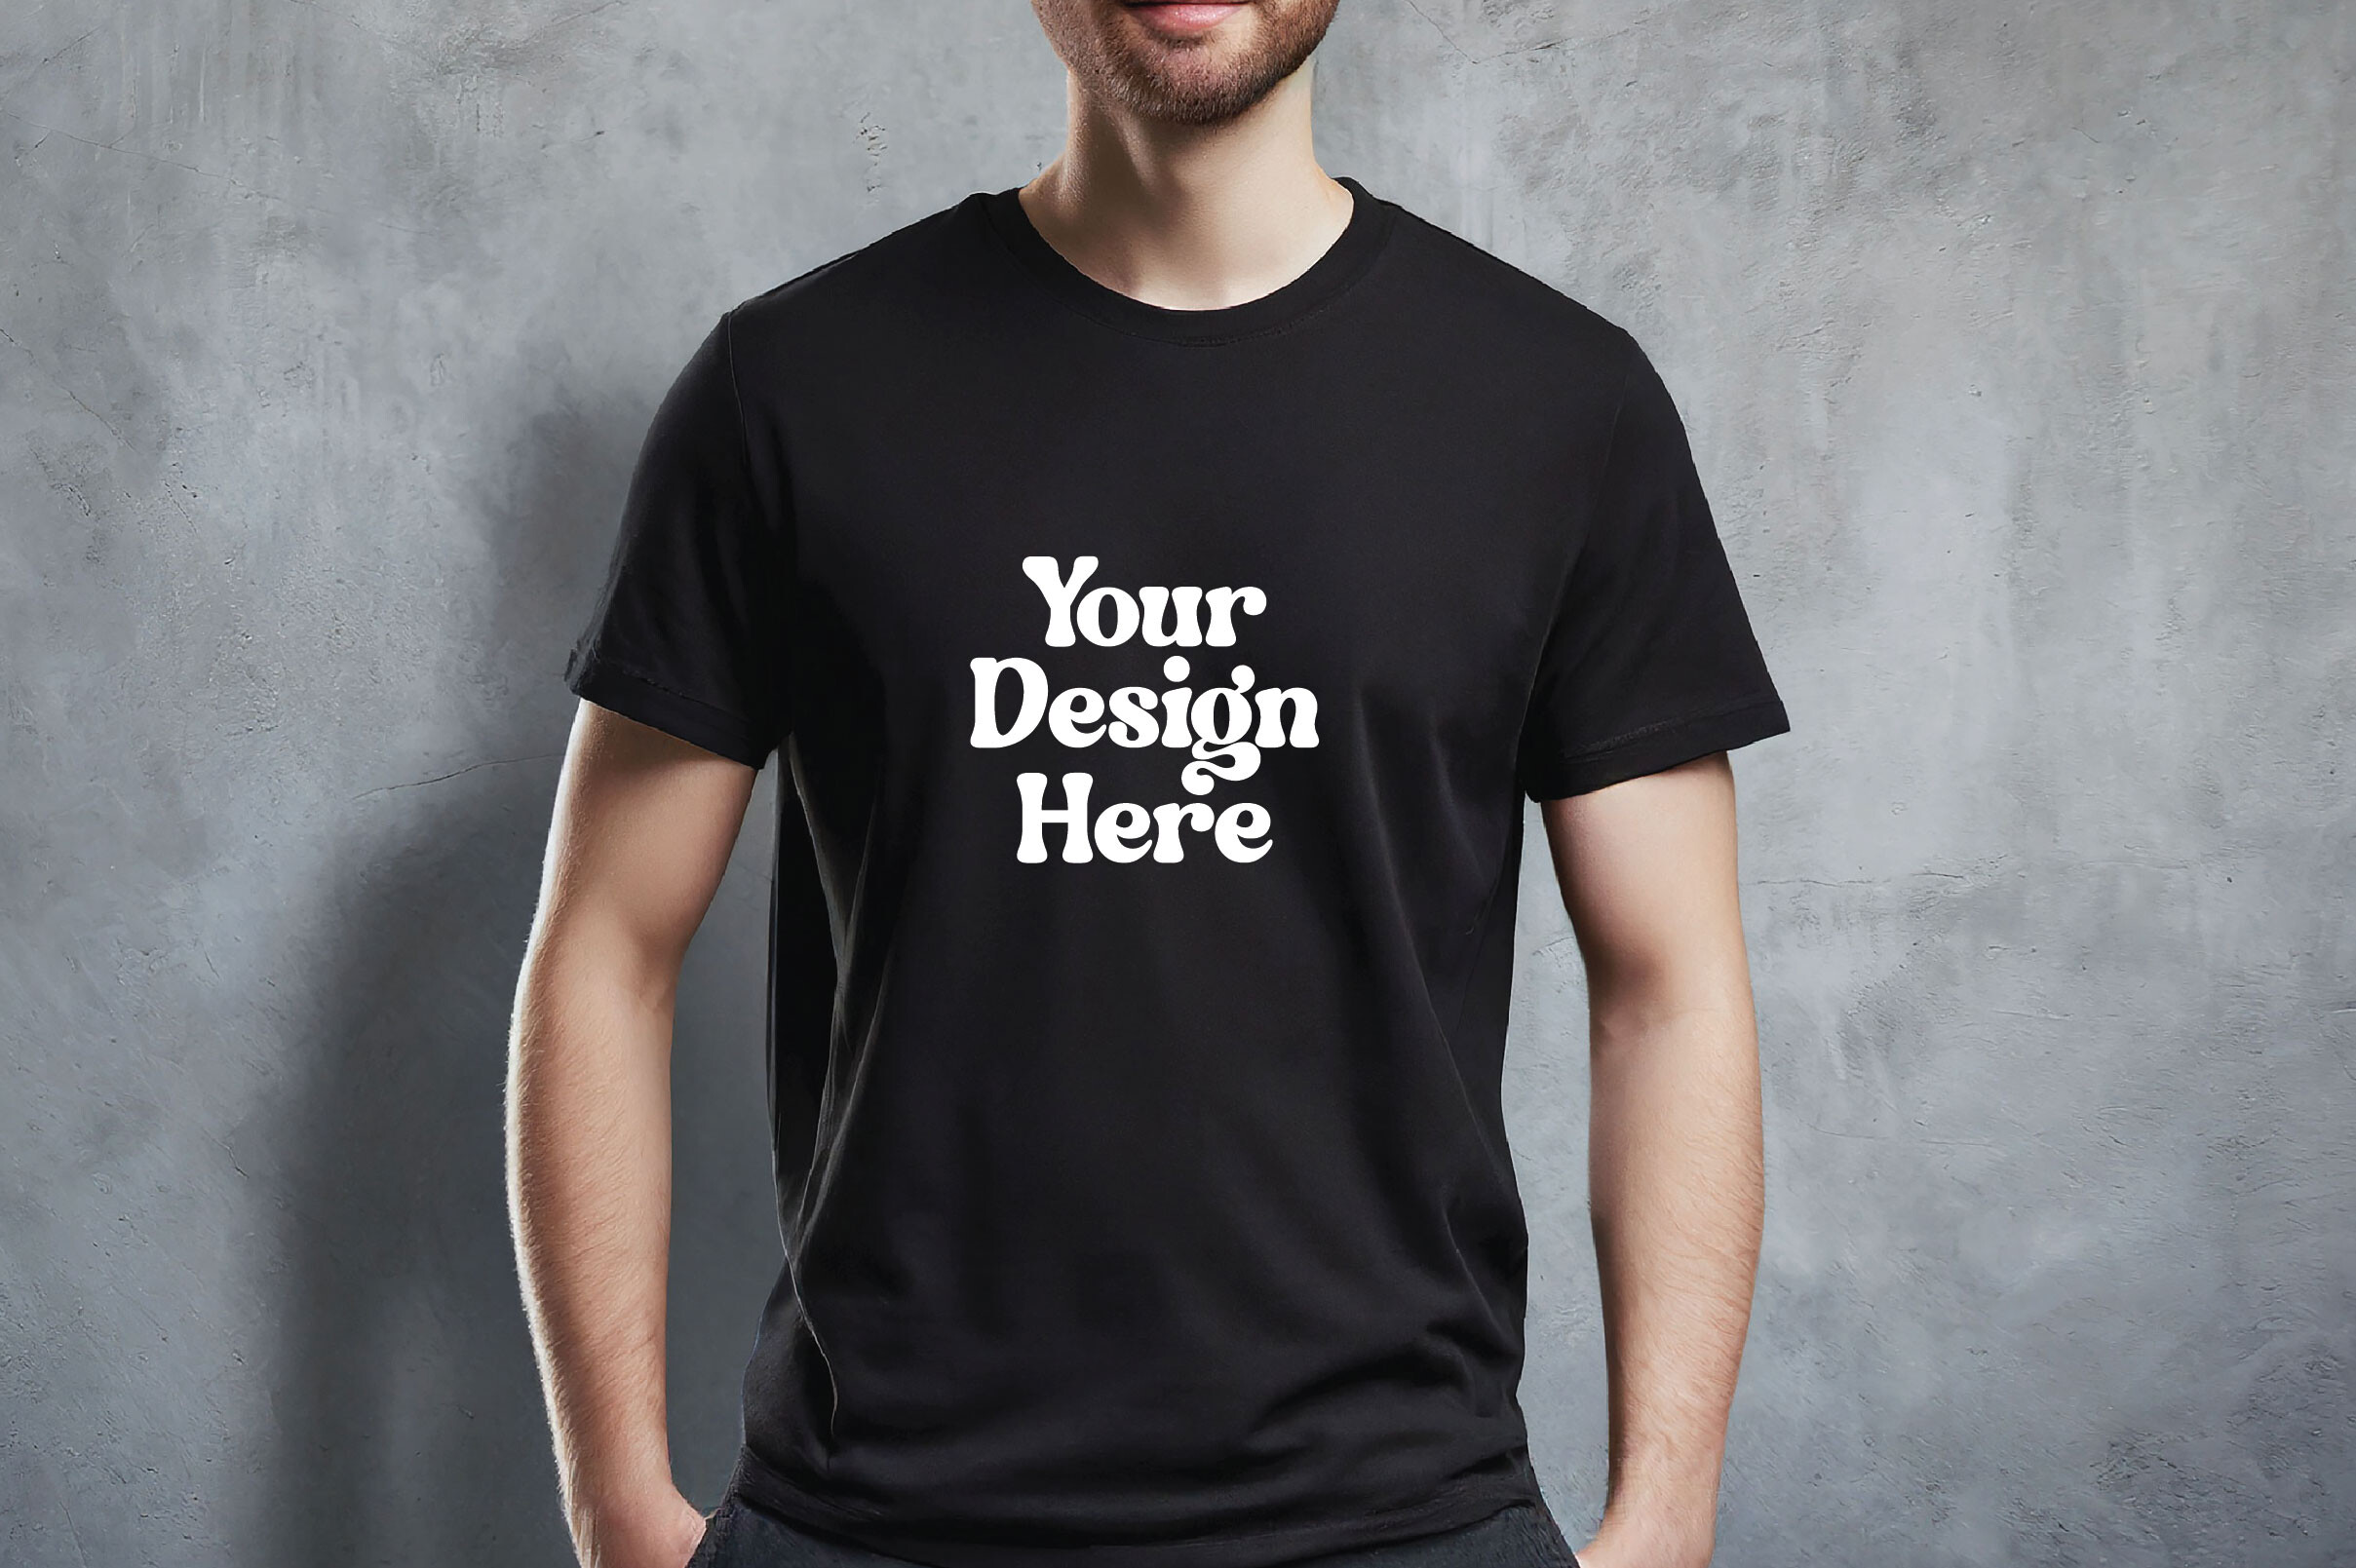 T-shirt Mockup Graphic by MockstarStudio · Creative Fabrica